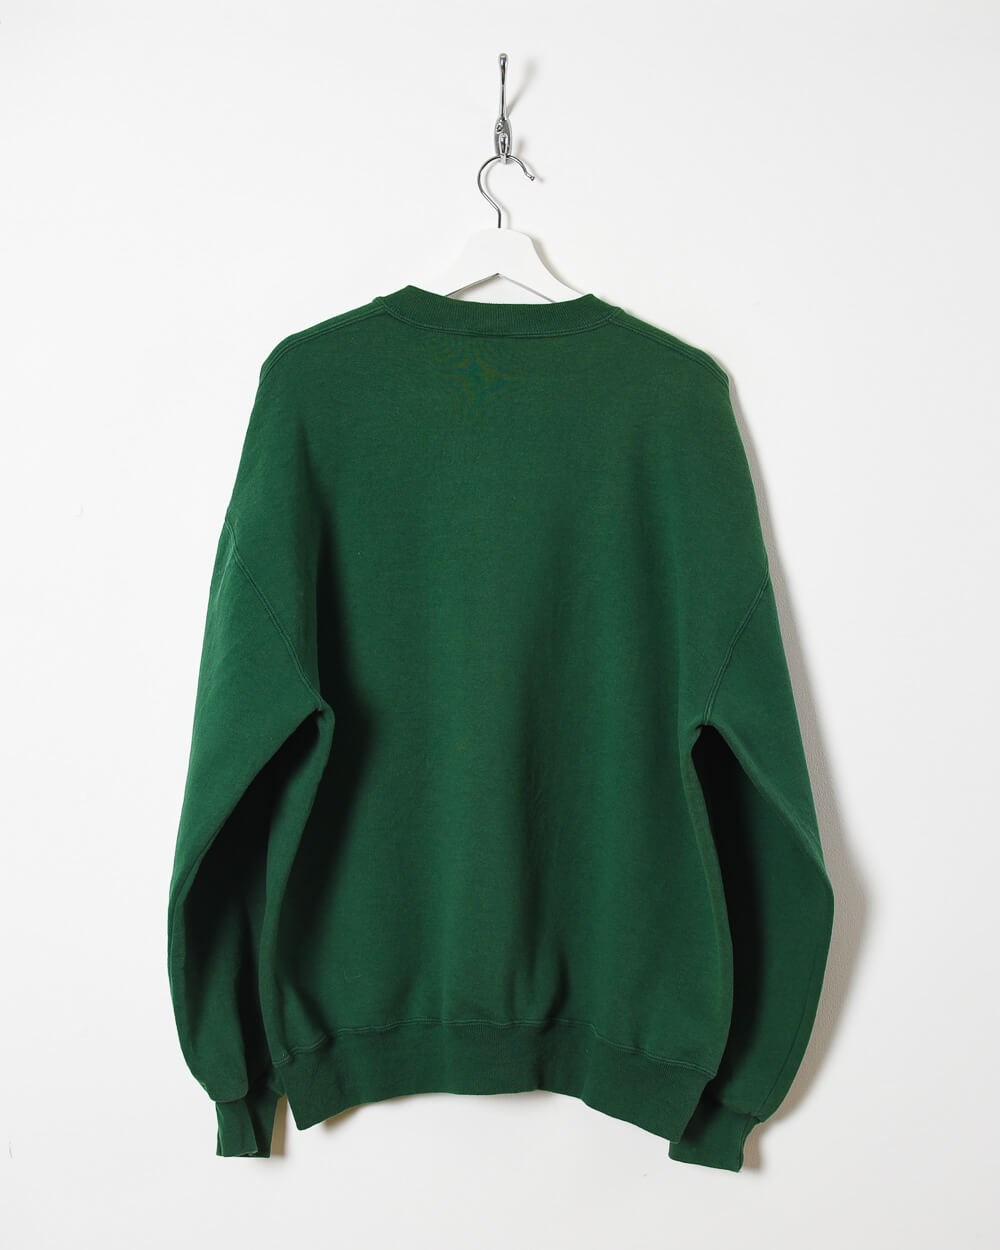 Green Russel Athletic Irish Sweatshirt - X-Large